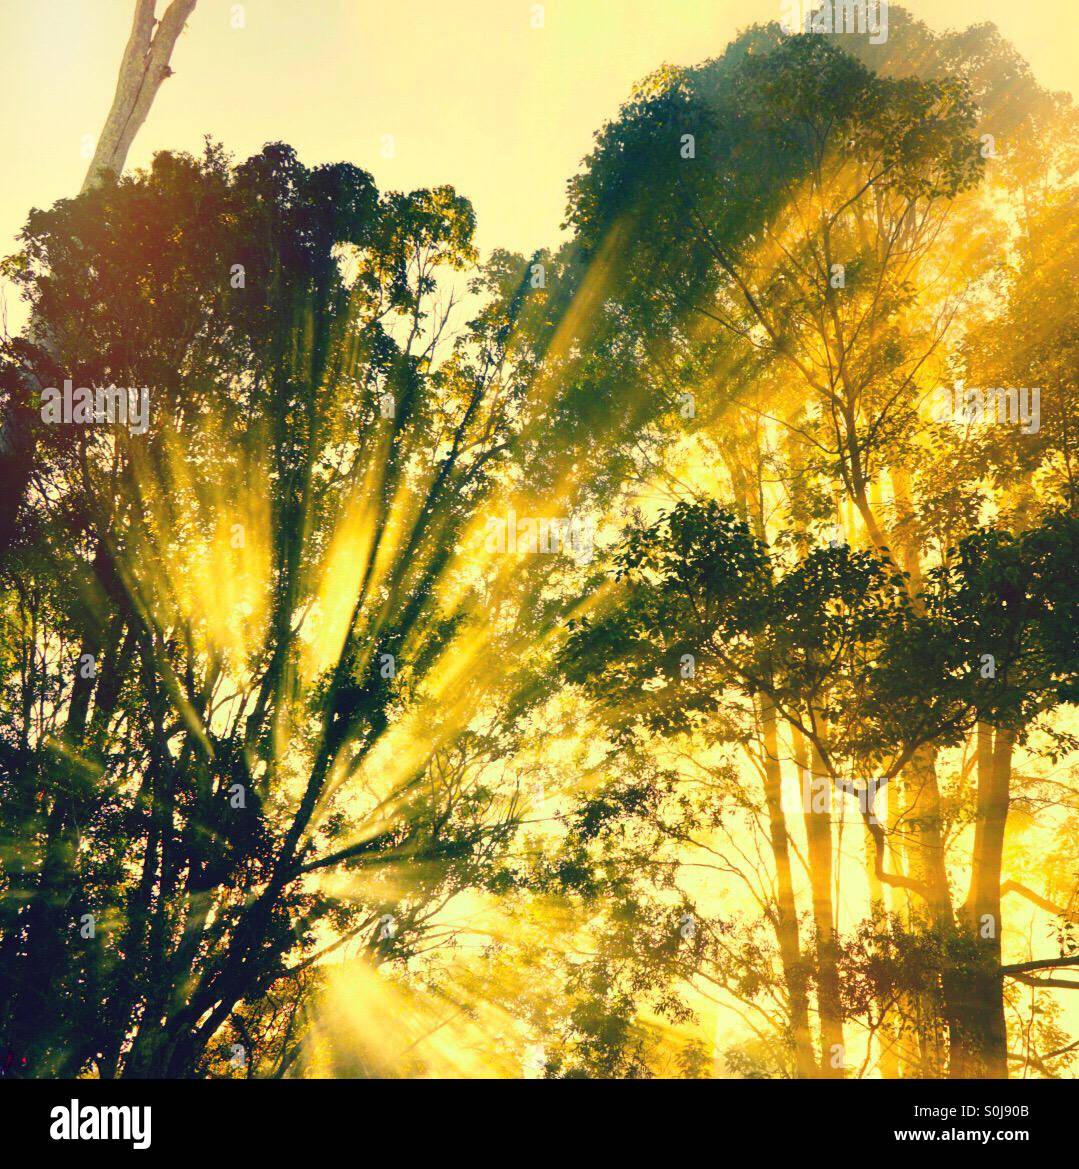 A sunburst through a group of misty trees Stock Photo